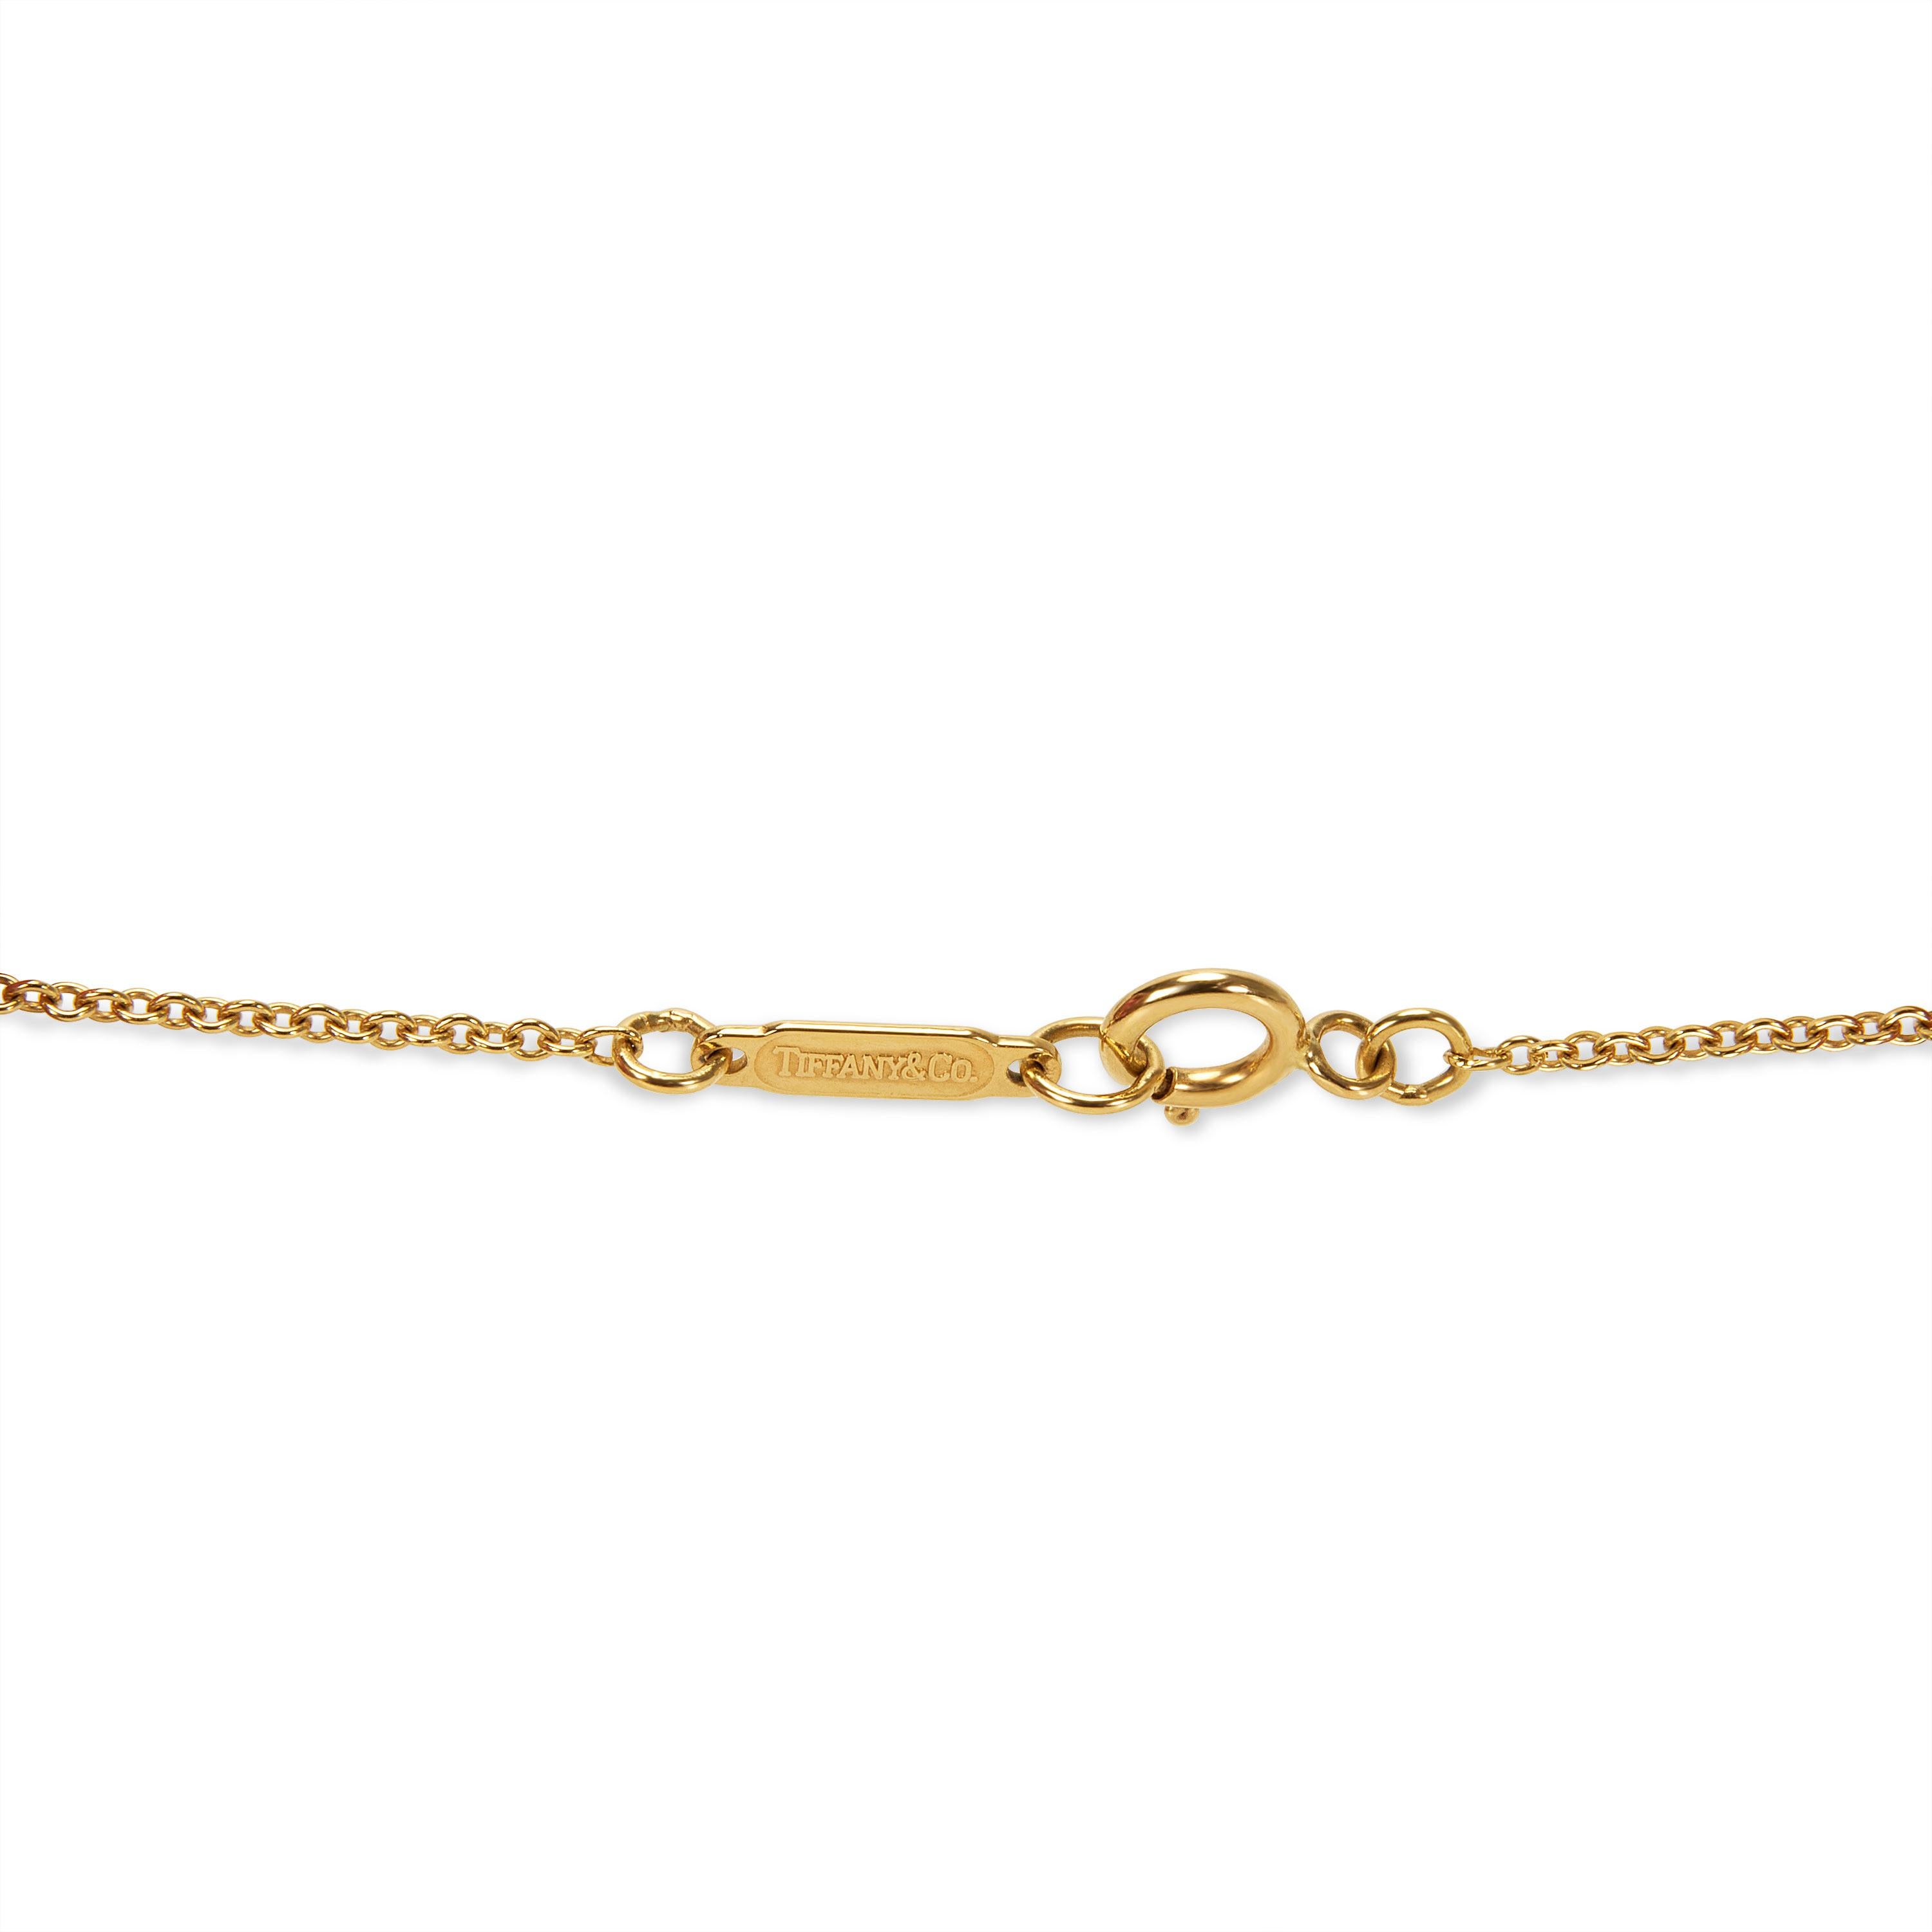 Tiffany & Co. Diamond Cross Necklace in 18 Karat Yellow Gold 2.00 Carat 1